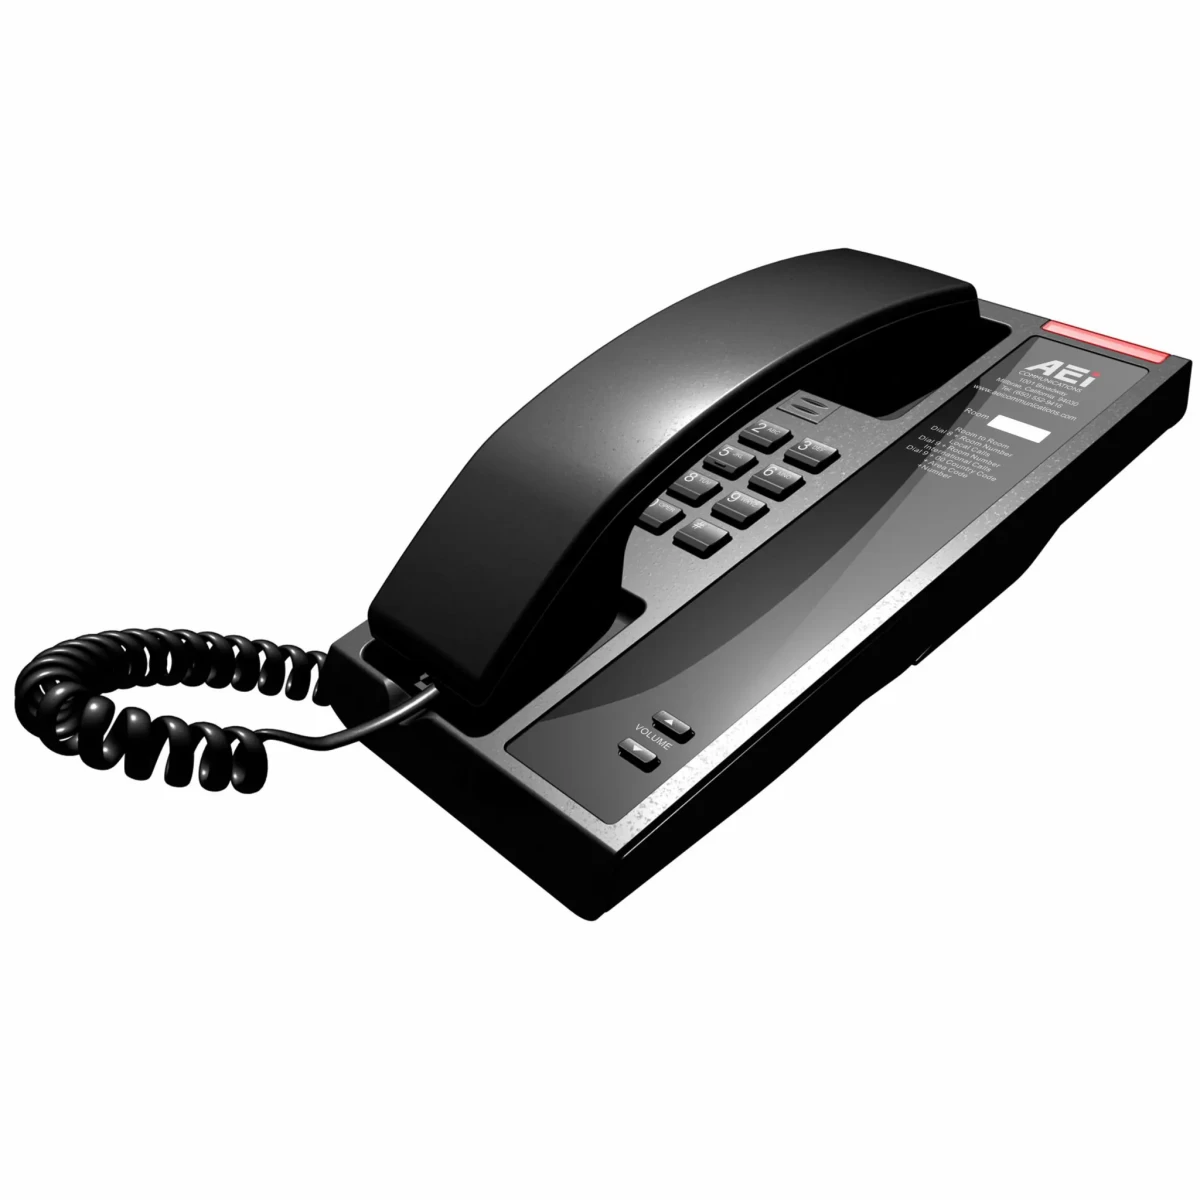 AEI AKD-5100 Slim Single-Line Analog Corded Telephone